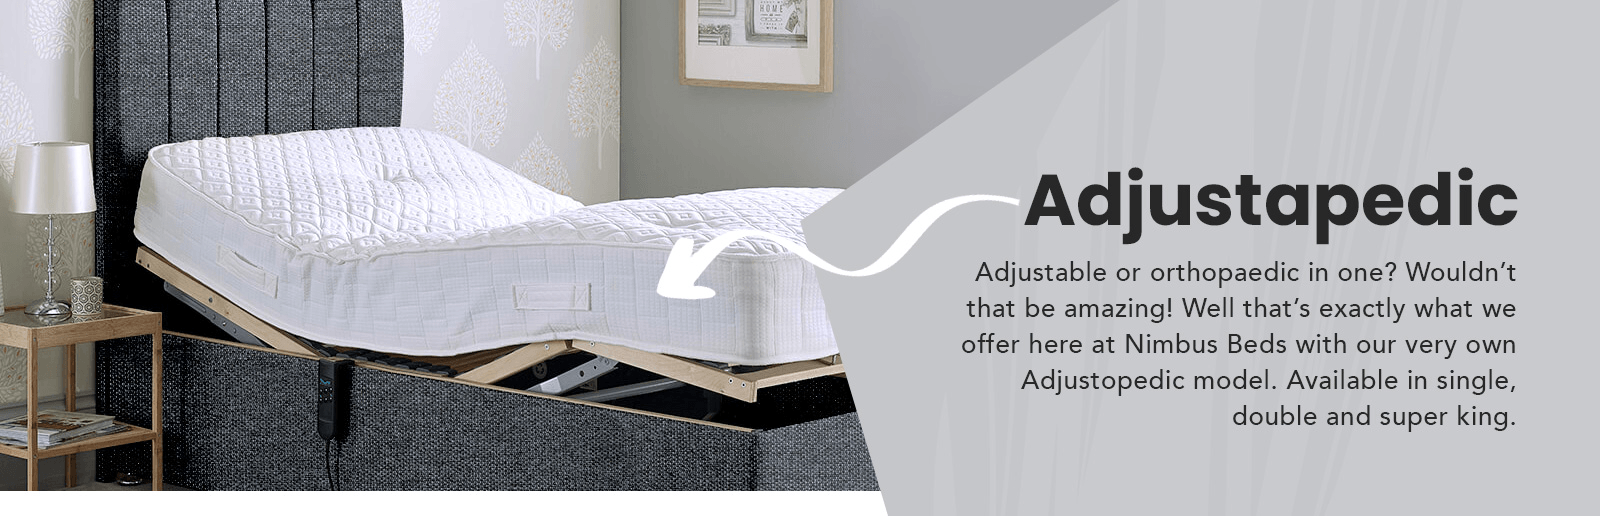 Adjustapedic Bed | Nimbus Beds